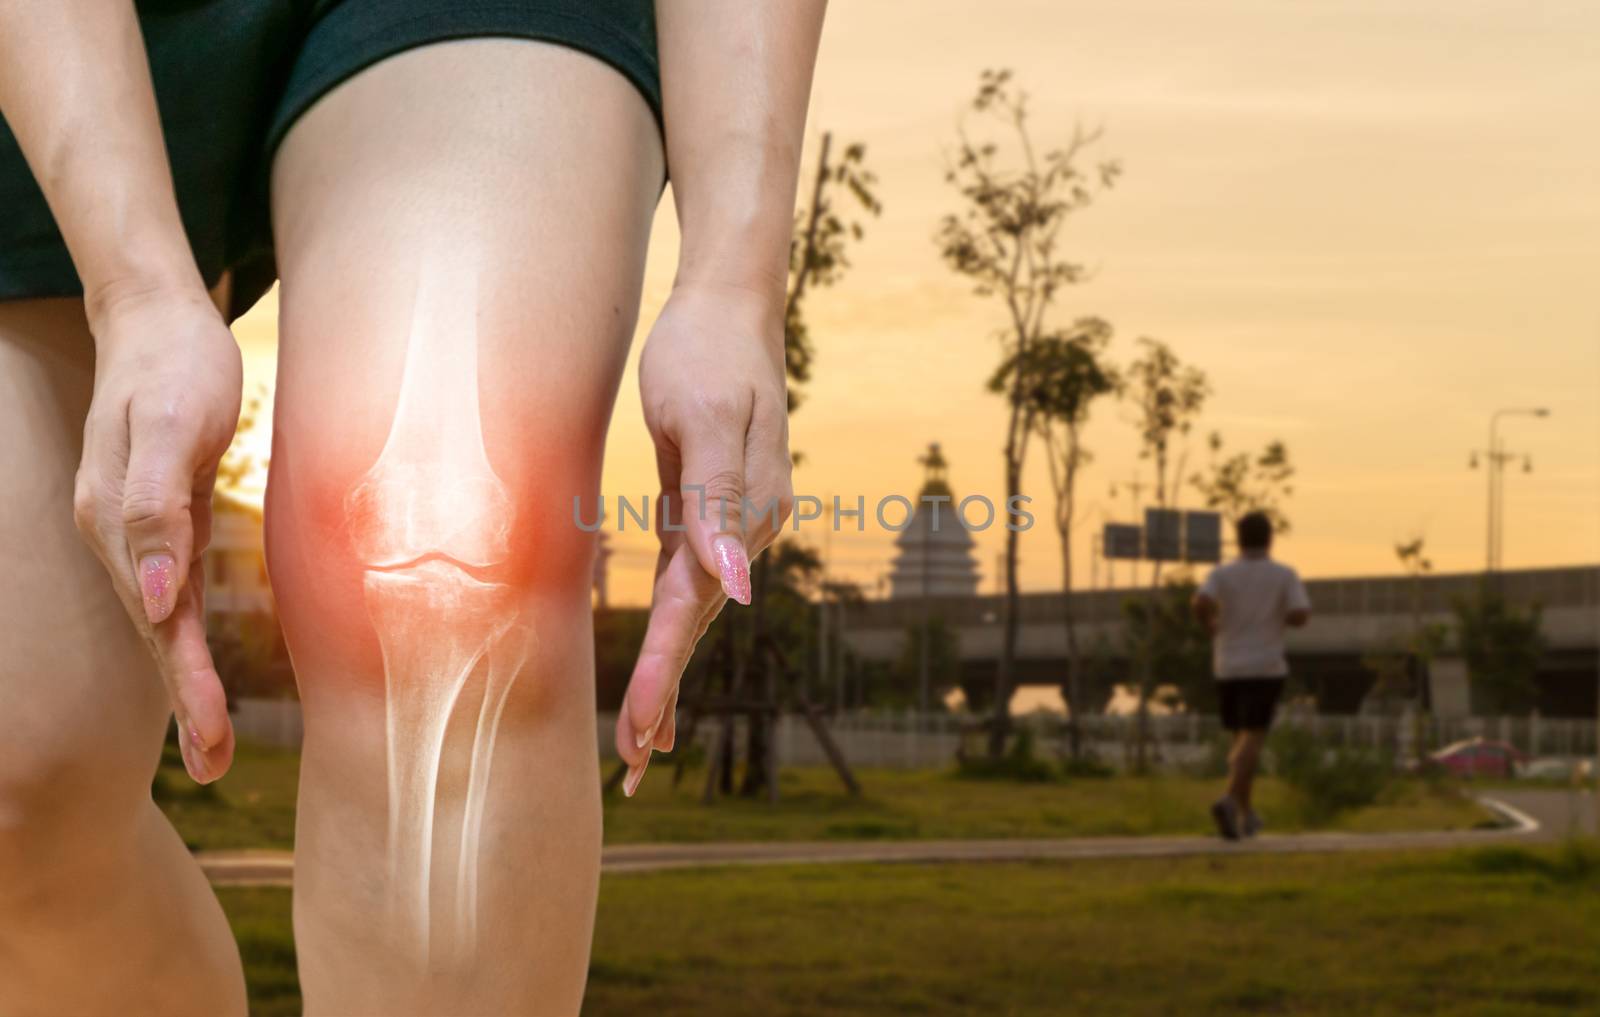 Human leg Osteoarthritis inflammation Of bone joints